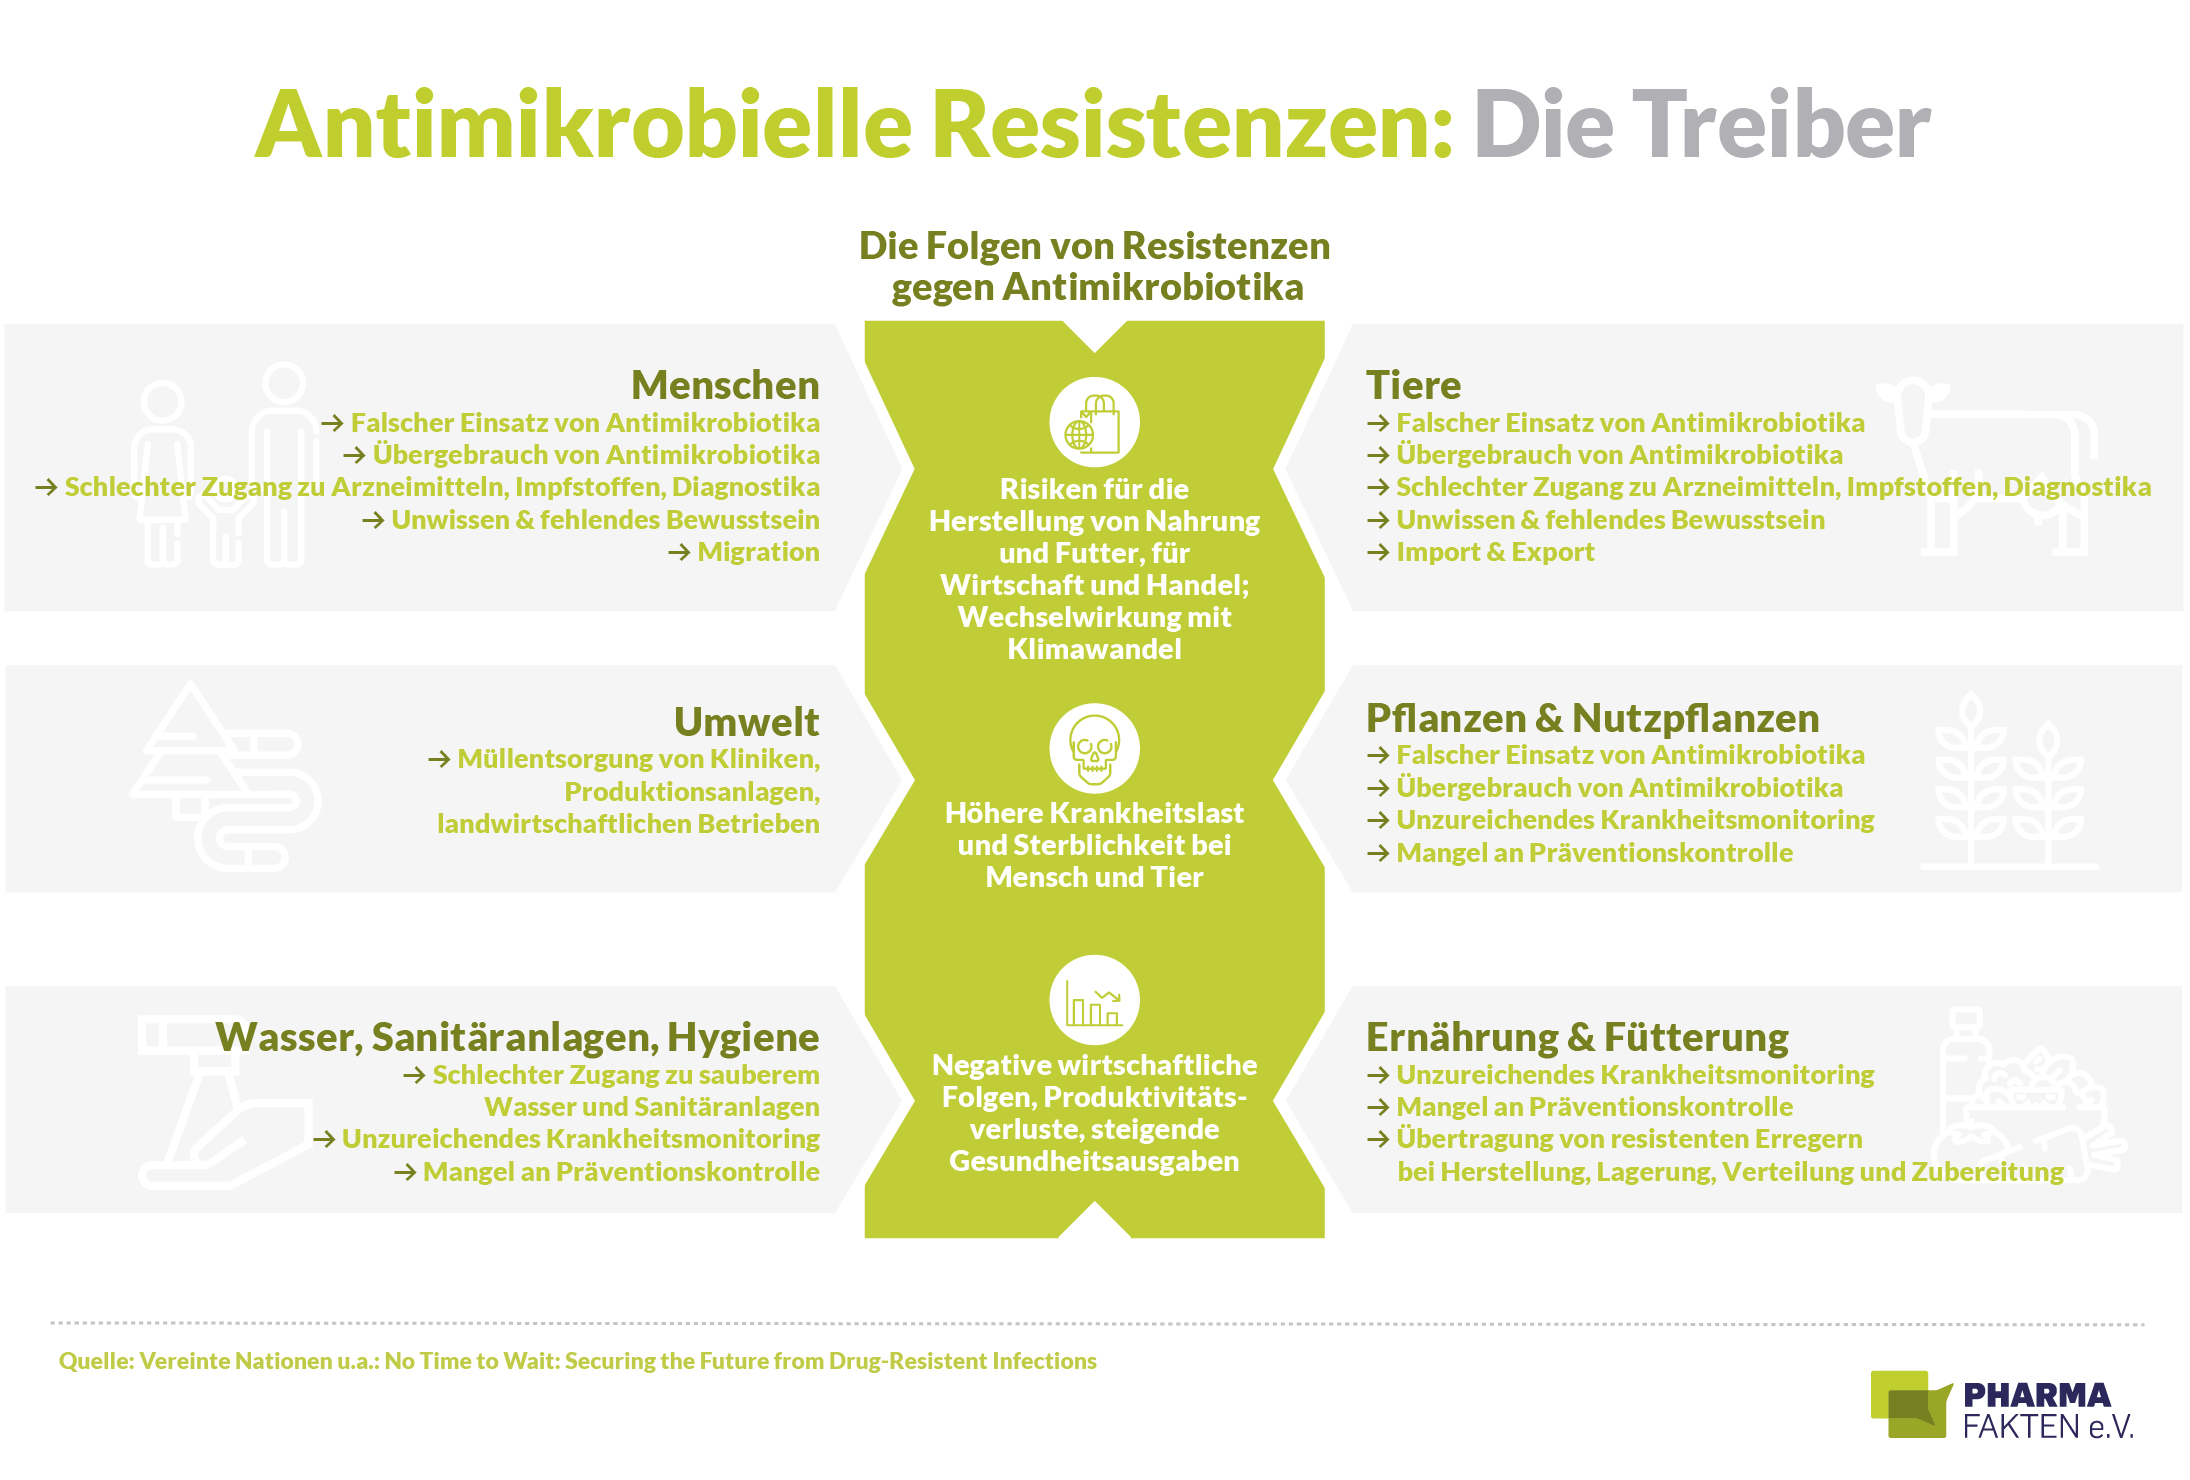 Pharma Fakten-Grafik: Die Treiber antimikrobieller Resistenzen